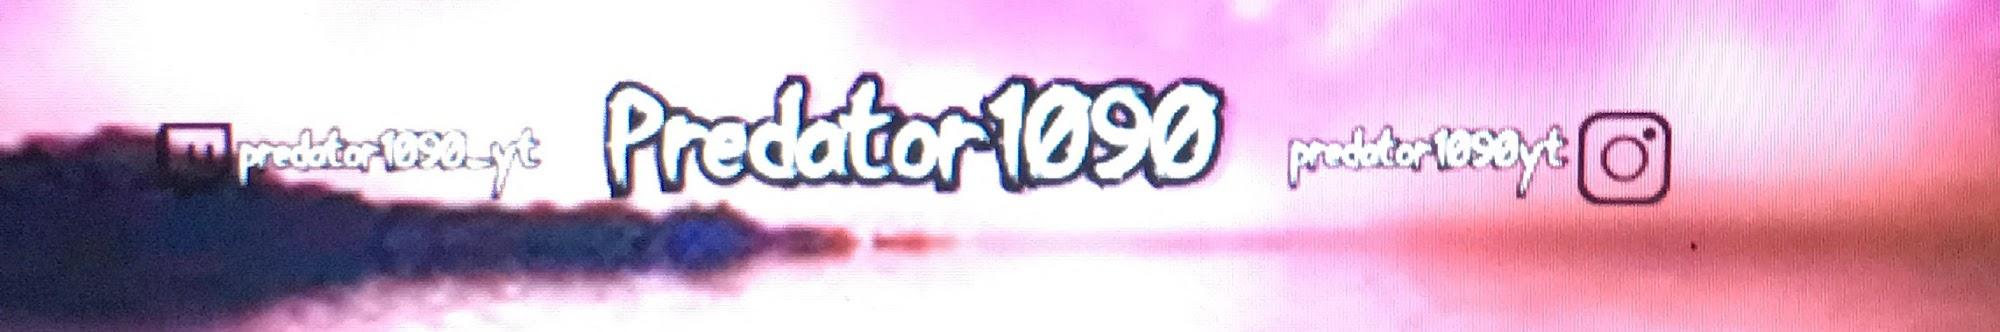 Predator1090